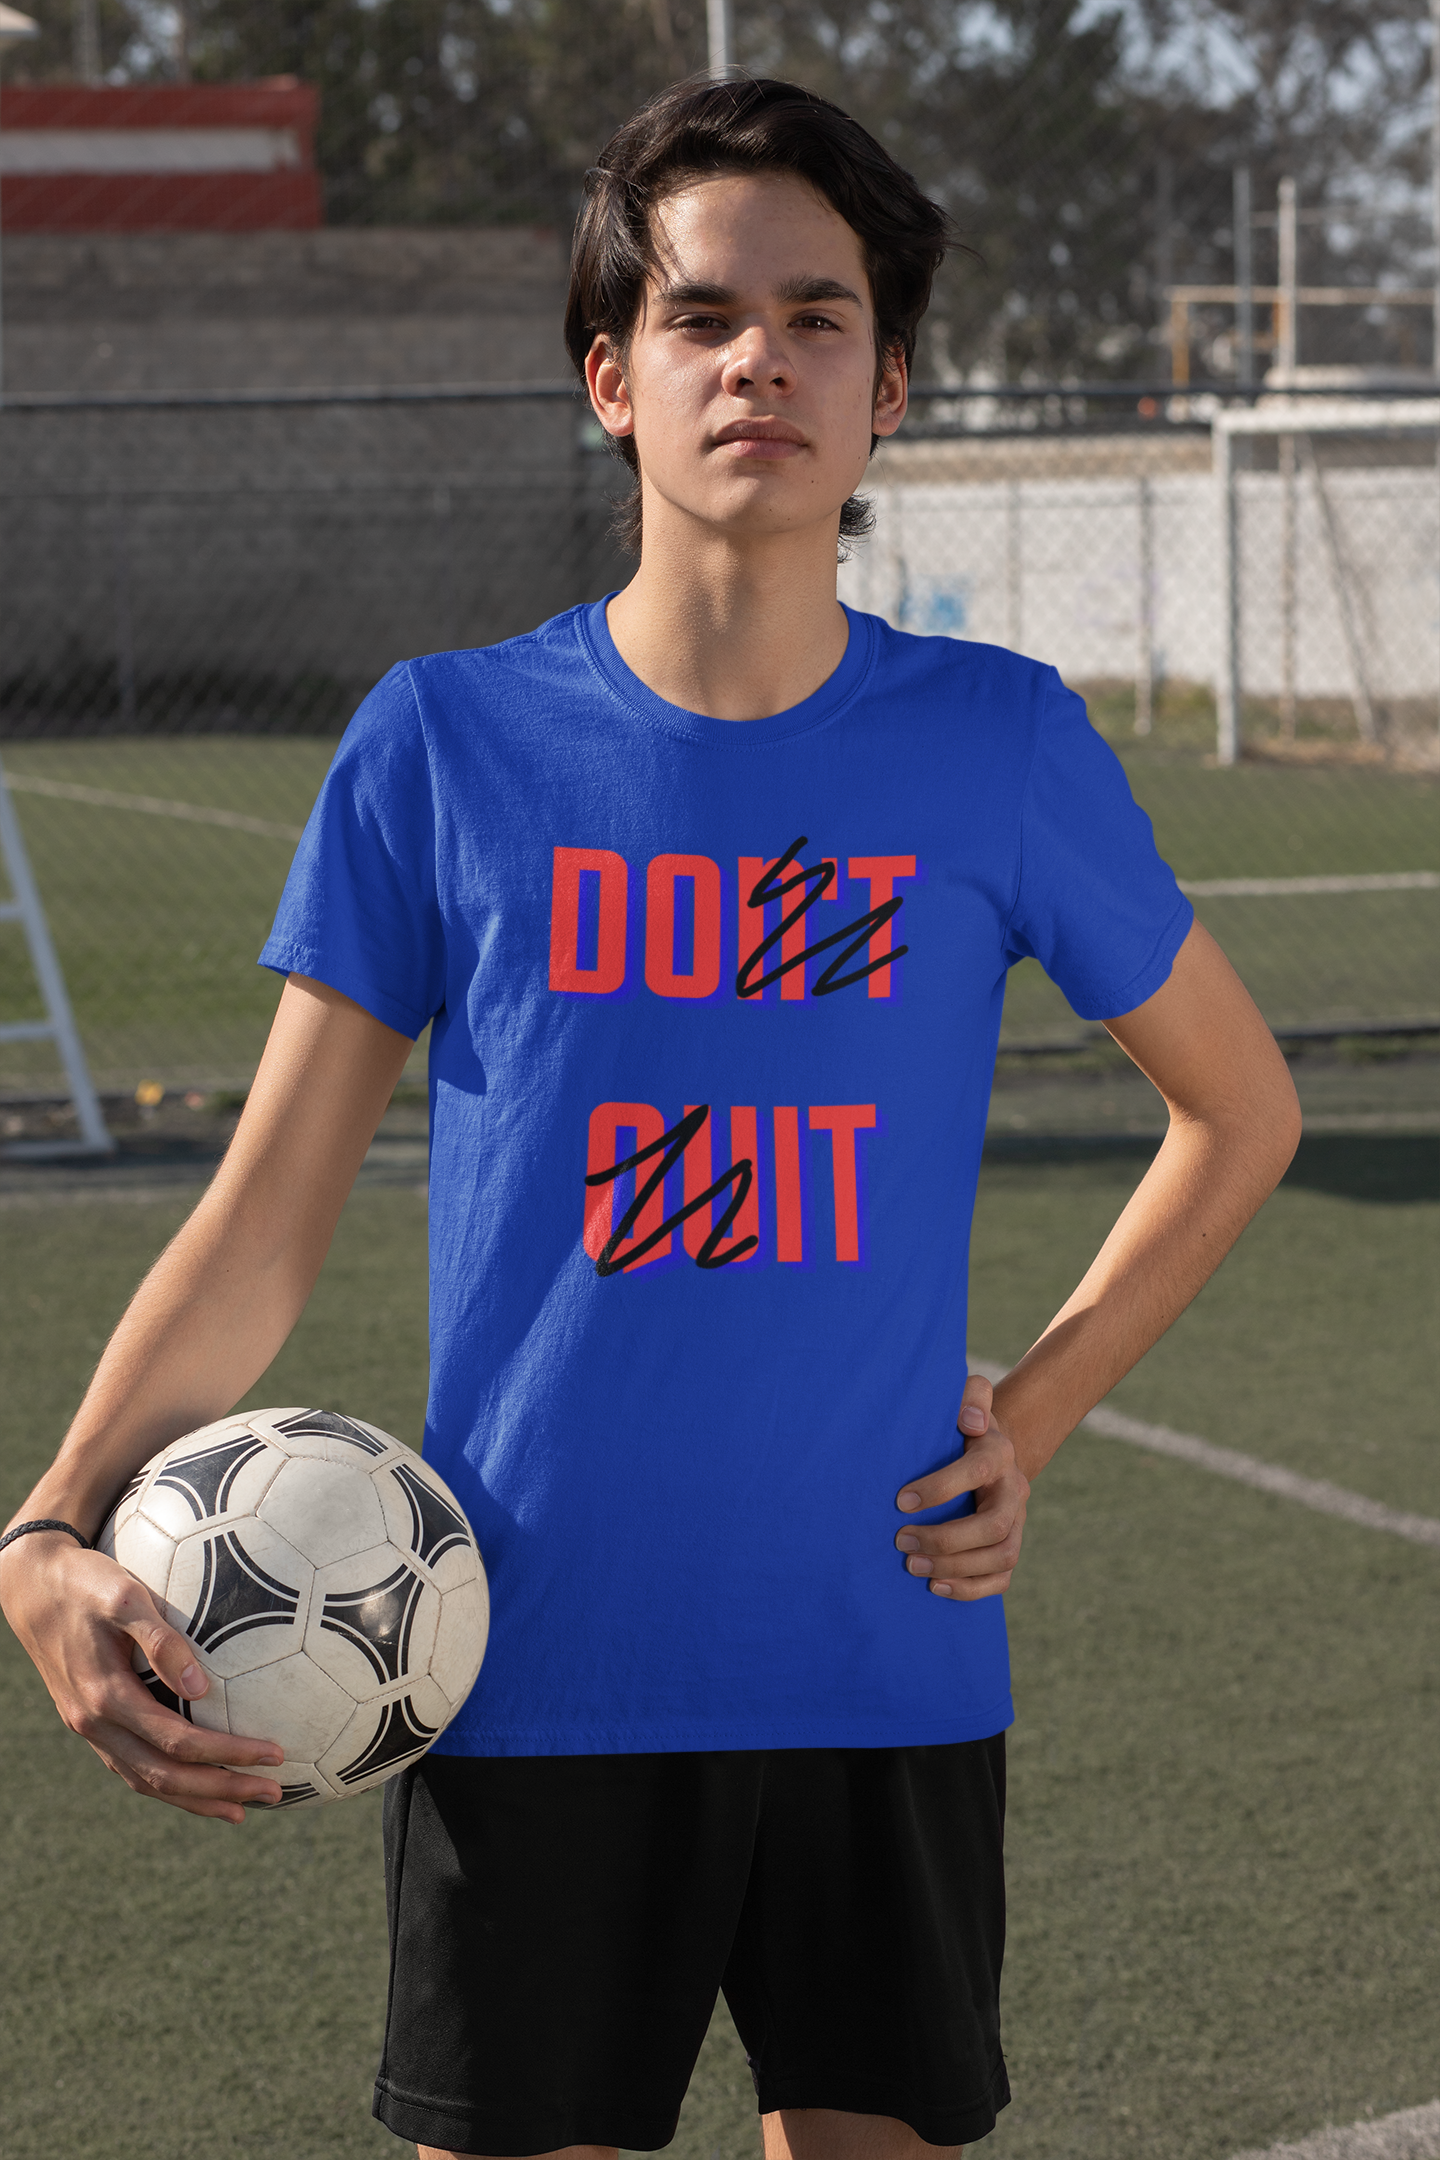 Don't Quit, Do It - Boy's, Teen, Youth T-Shirt